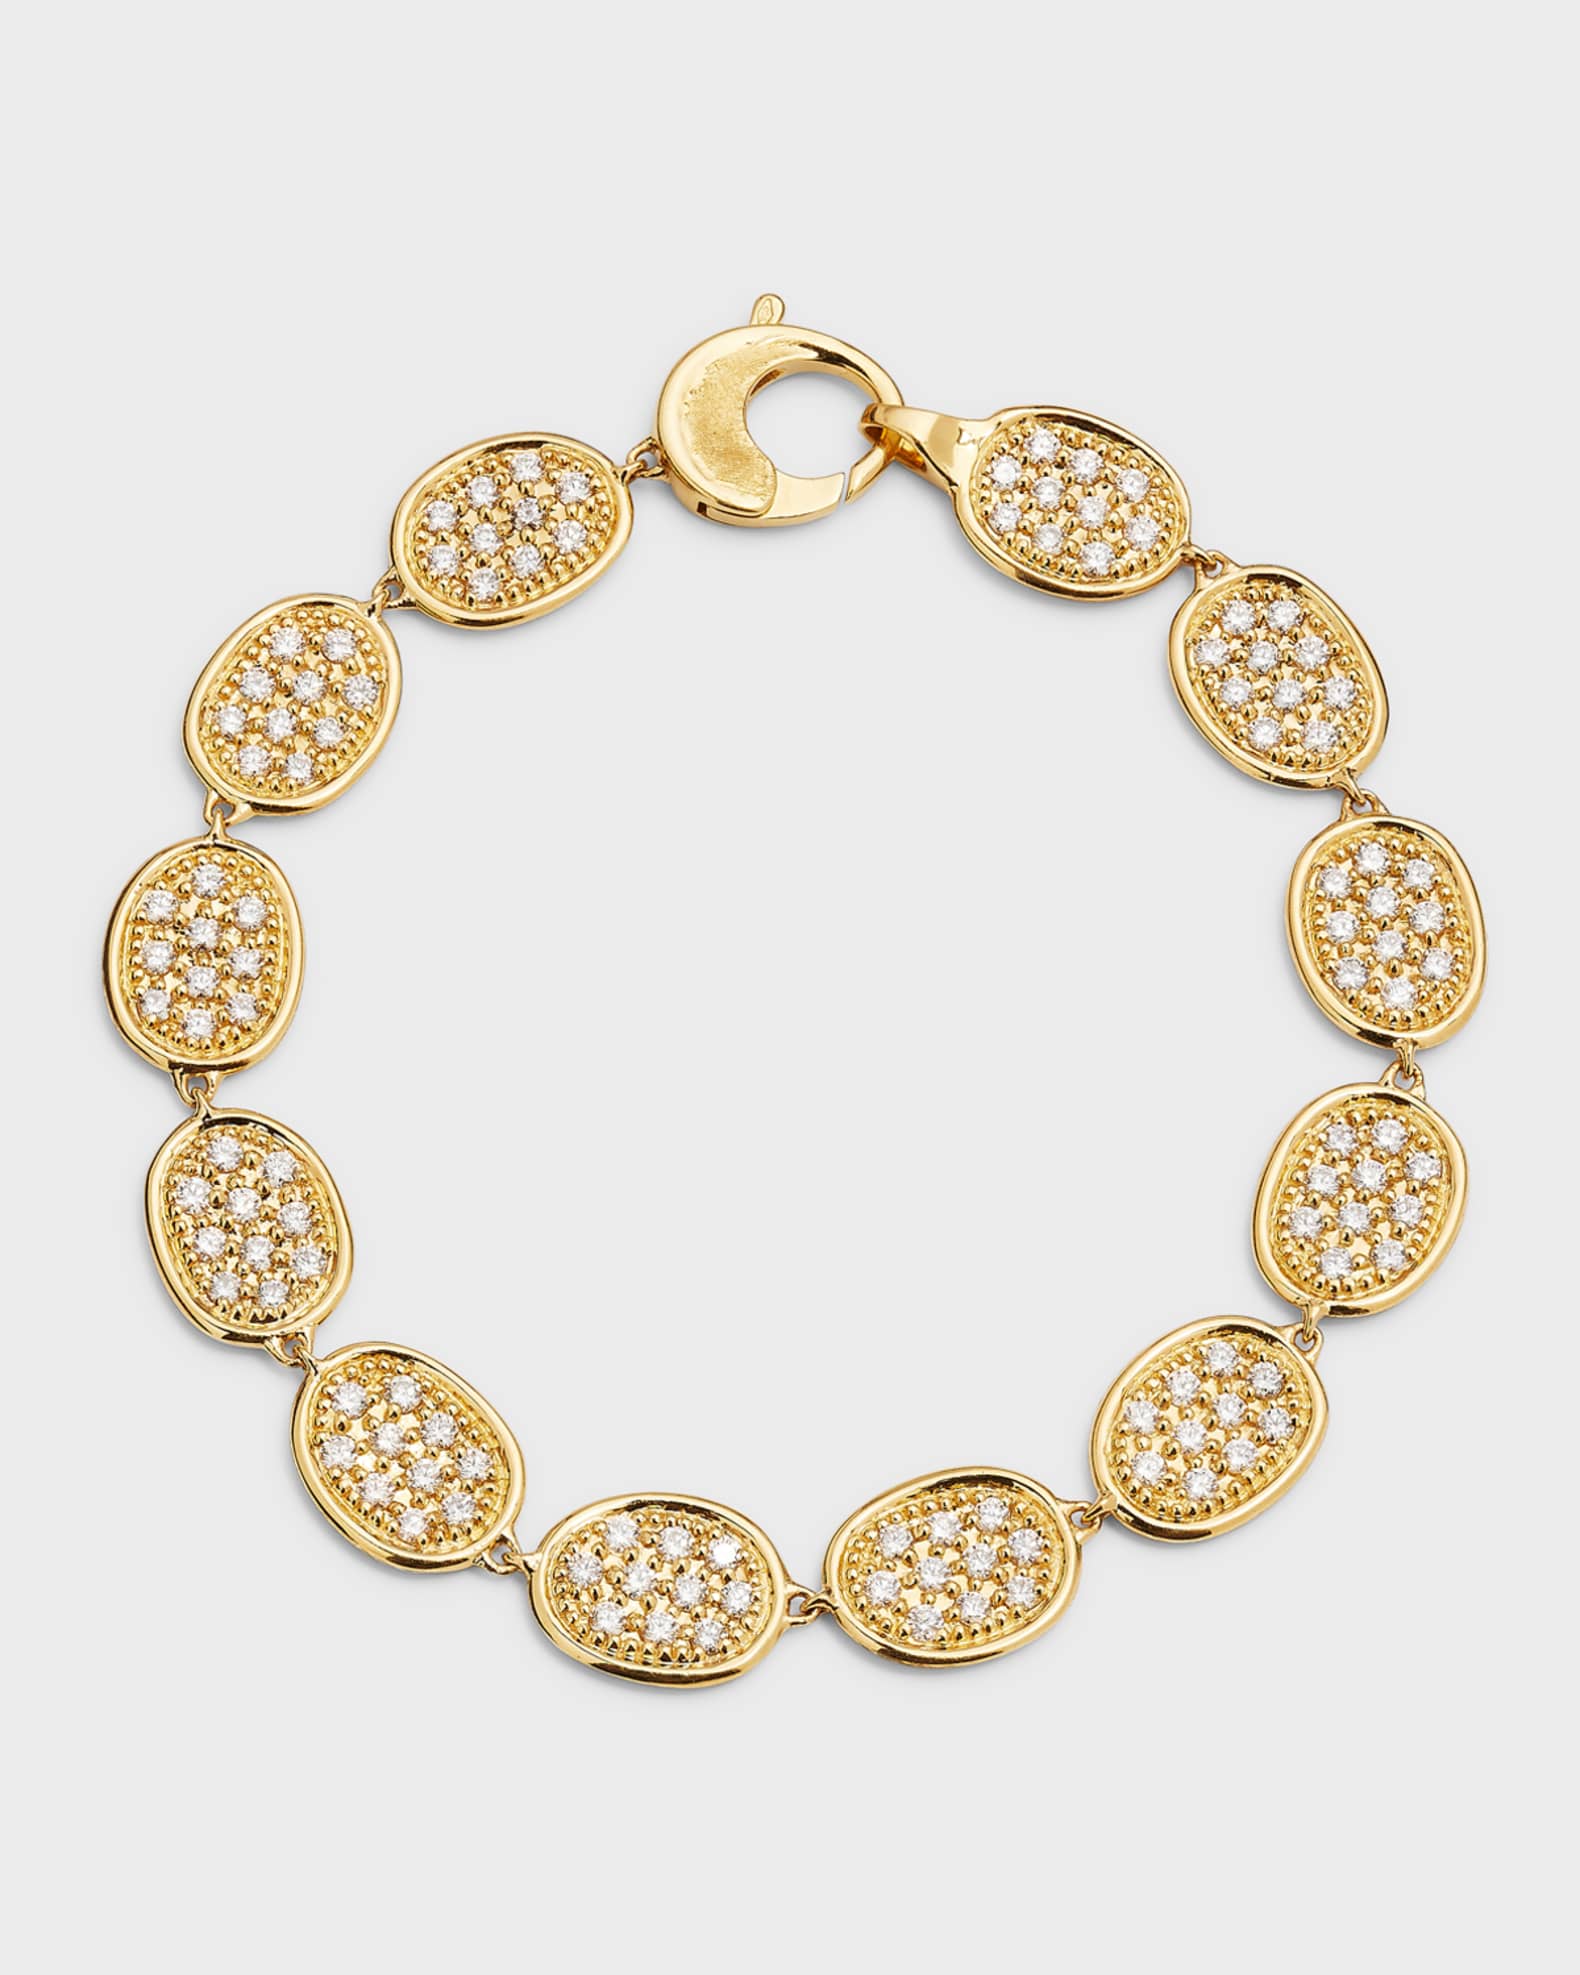 Marco Bicego Lunaria Yellow Gold Bracelet with Diamonds | Neiman Marcus